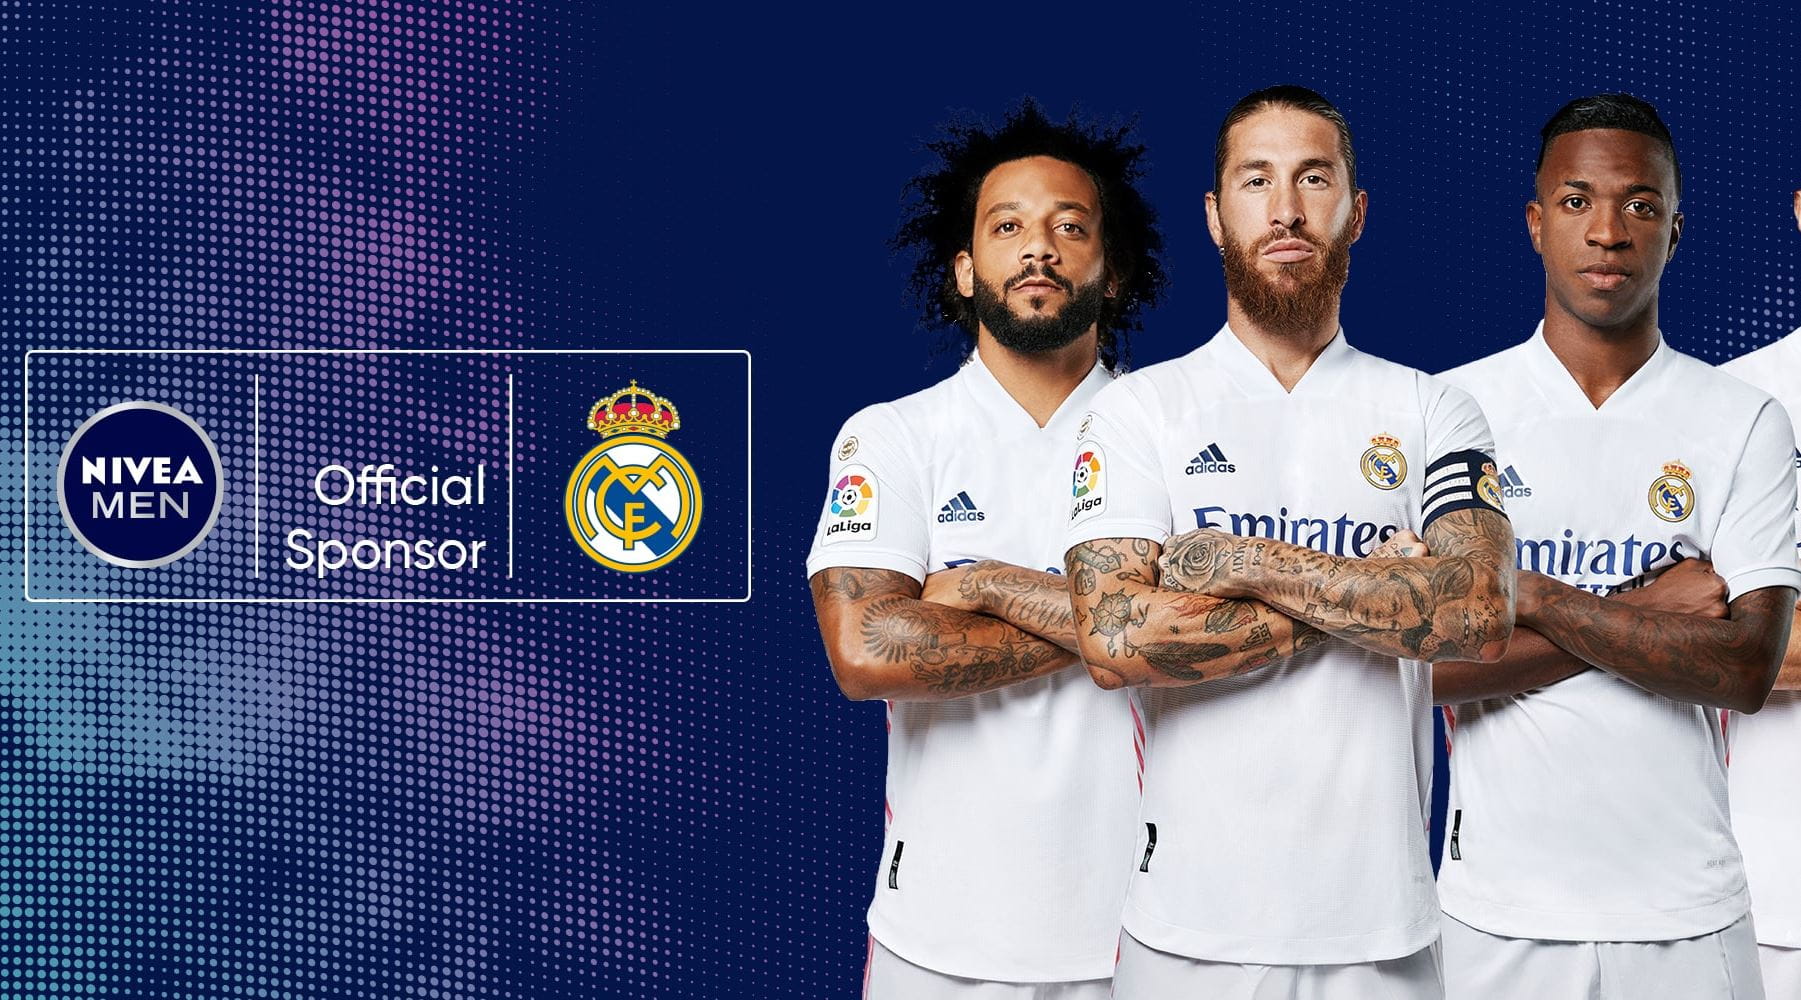 NIVEA MEN x Real Madrid Partnership banner